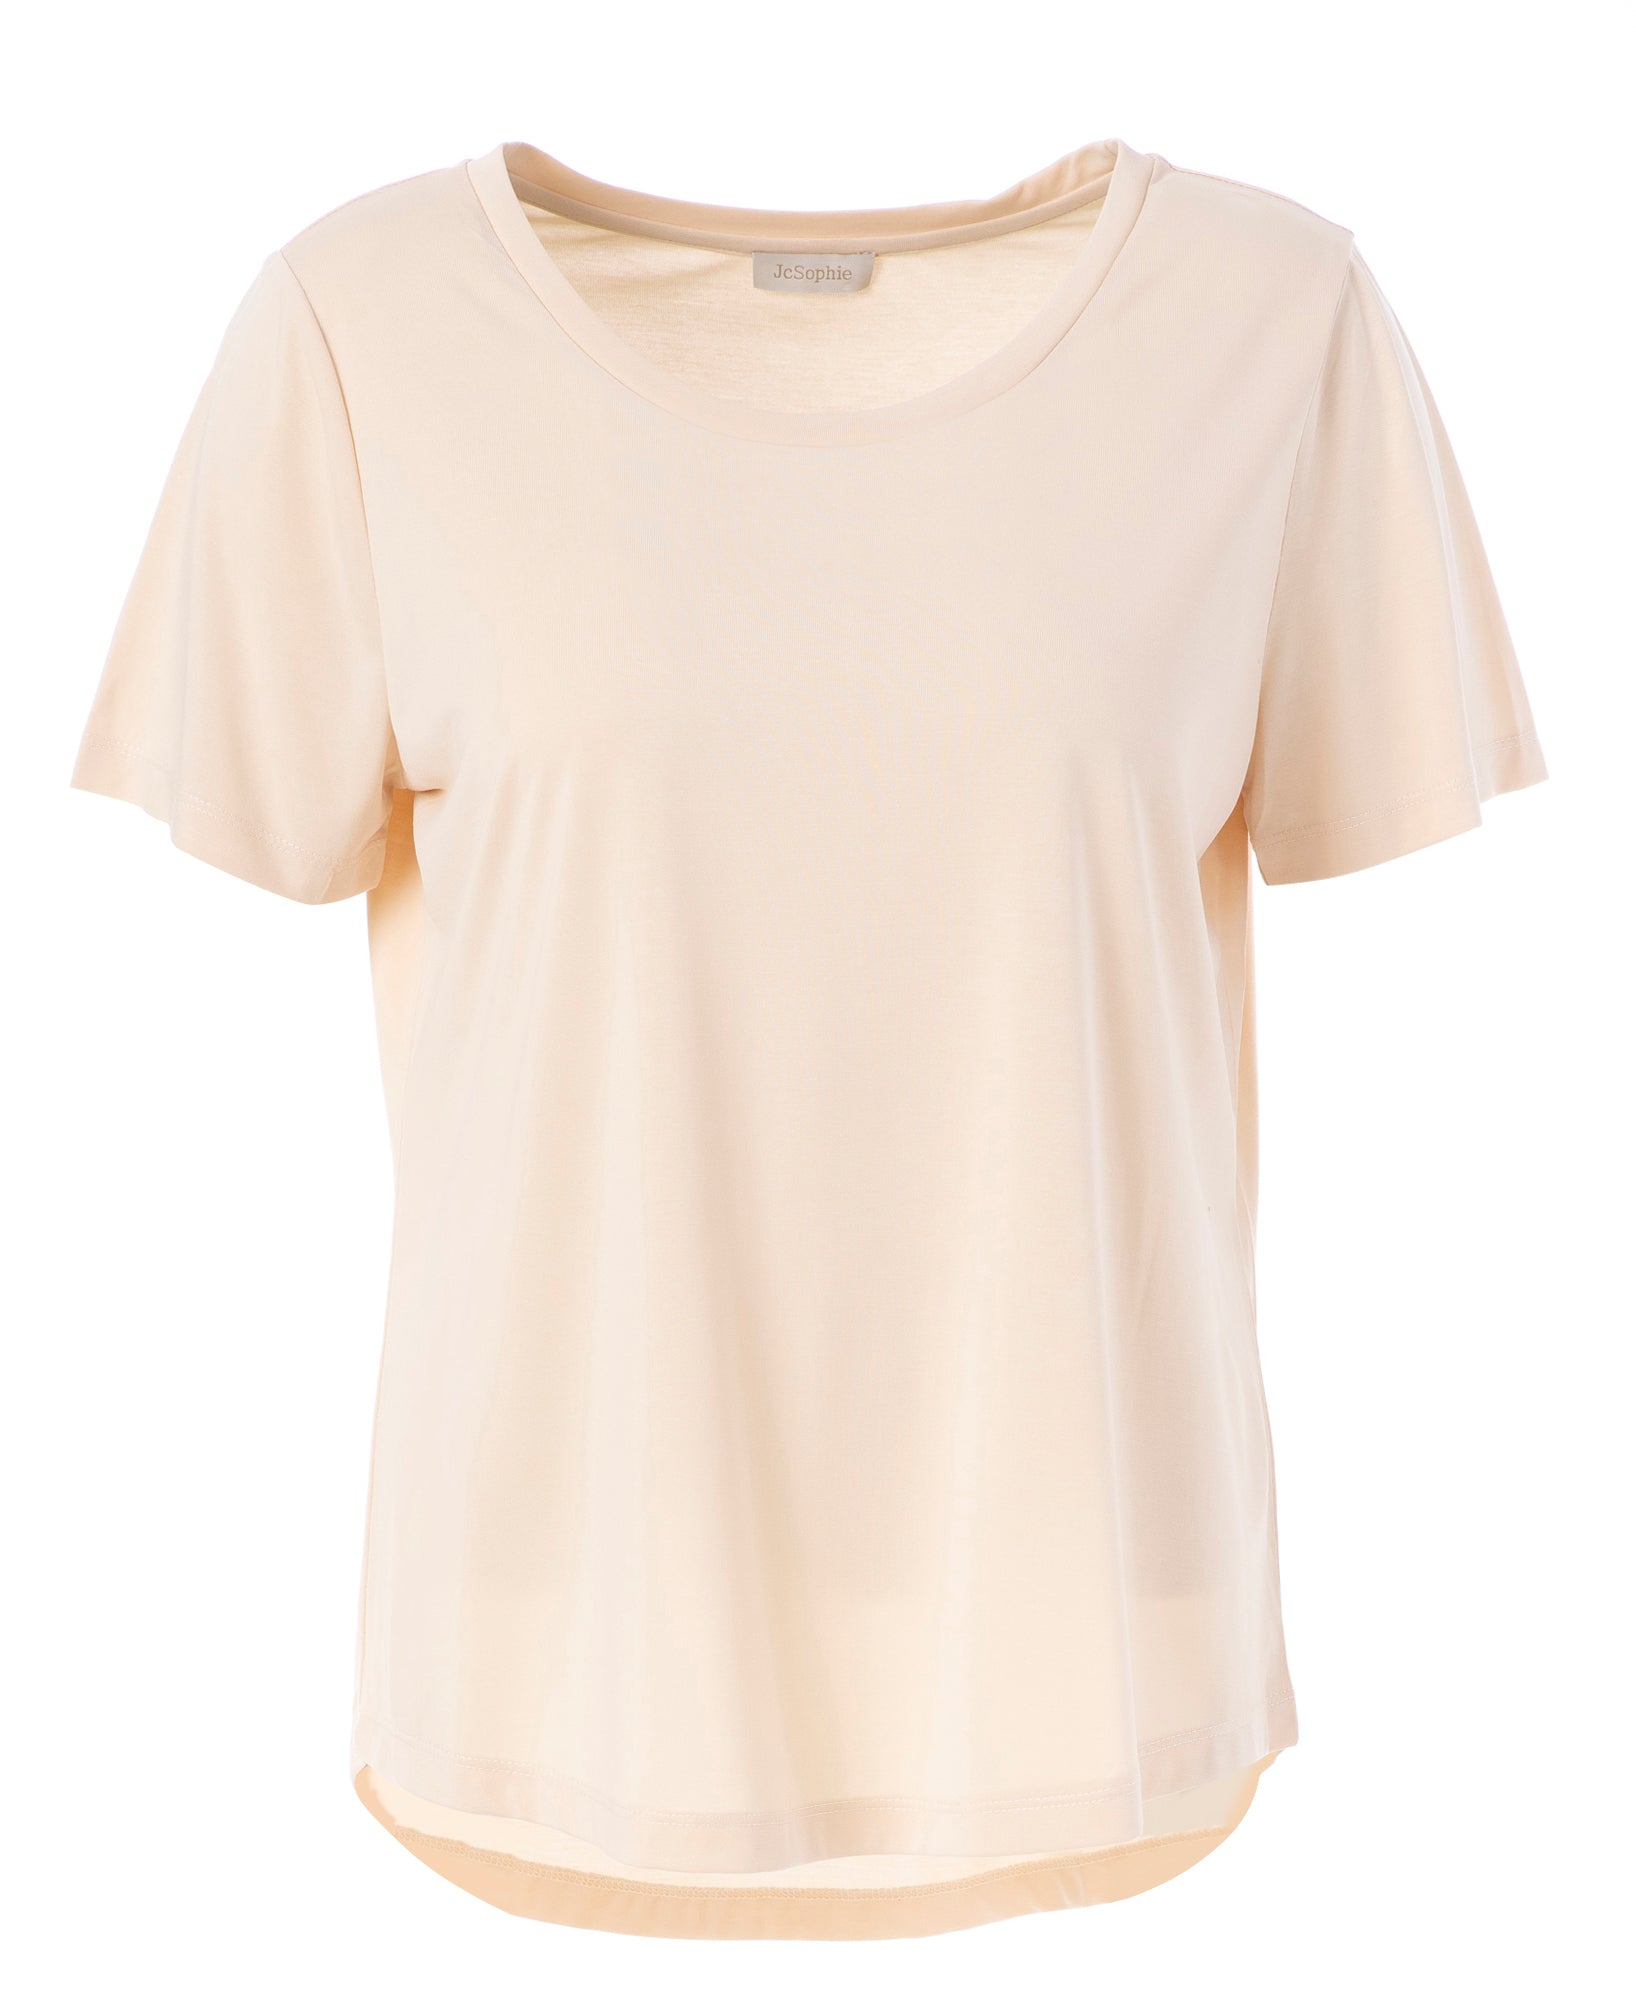 JcSophie - T-Shirt Cashmere Light Apricot